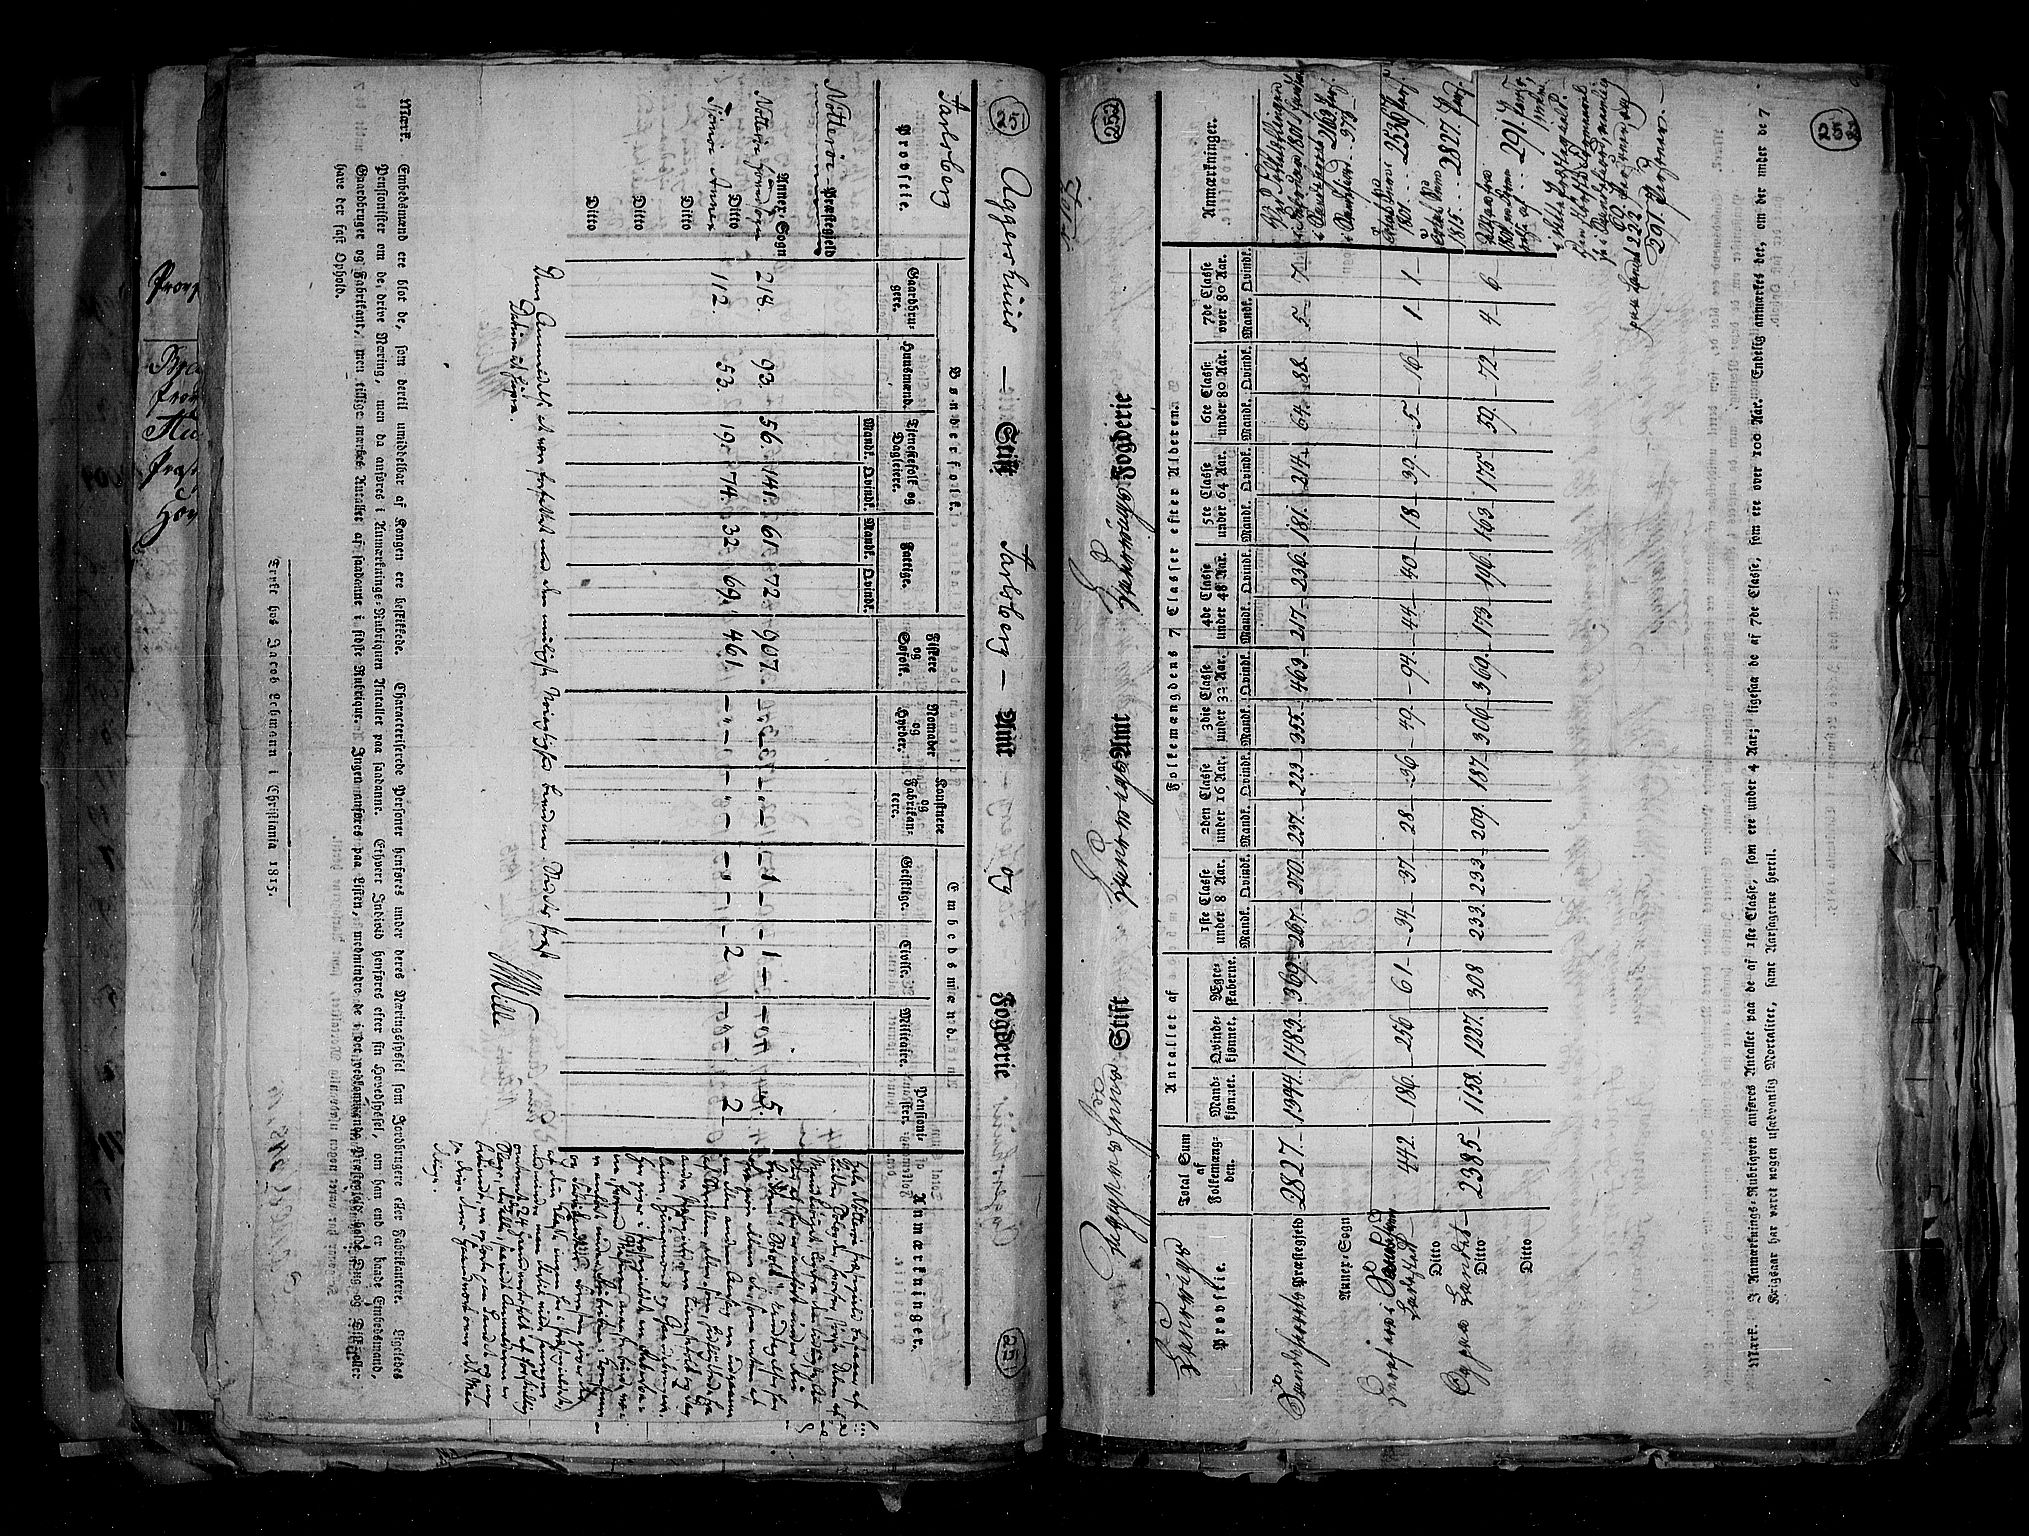 RA, Census 1815, vol. 1: Akershus stift and Kristiansand stift, 1815, p. 181